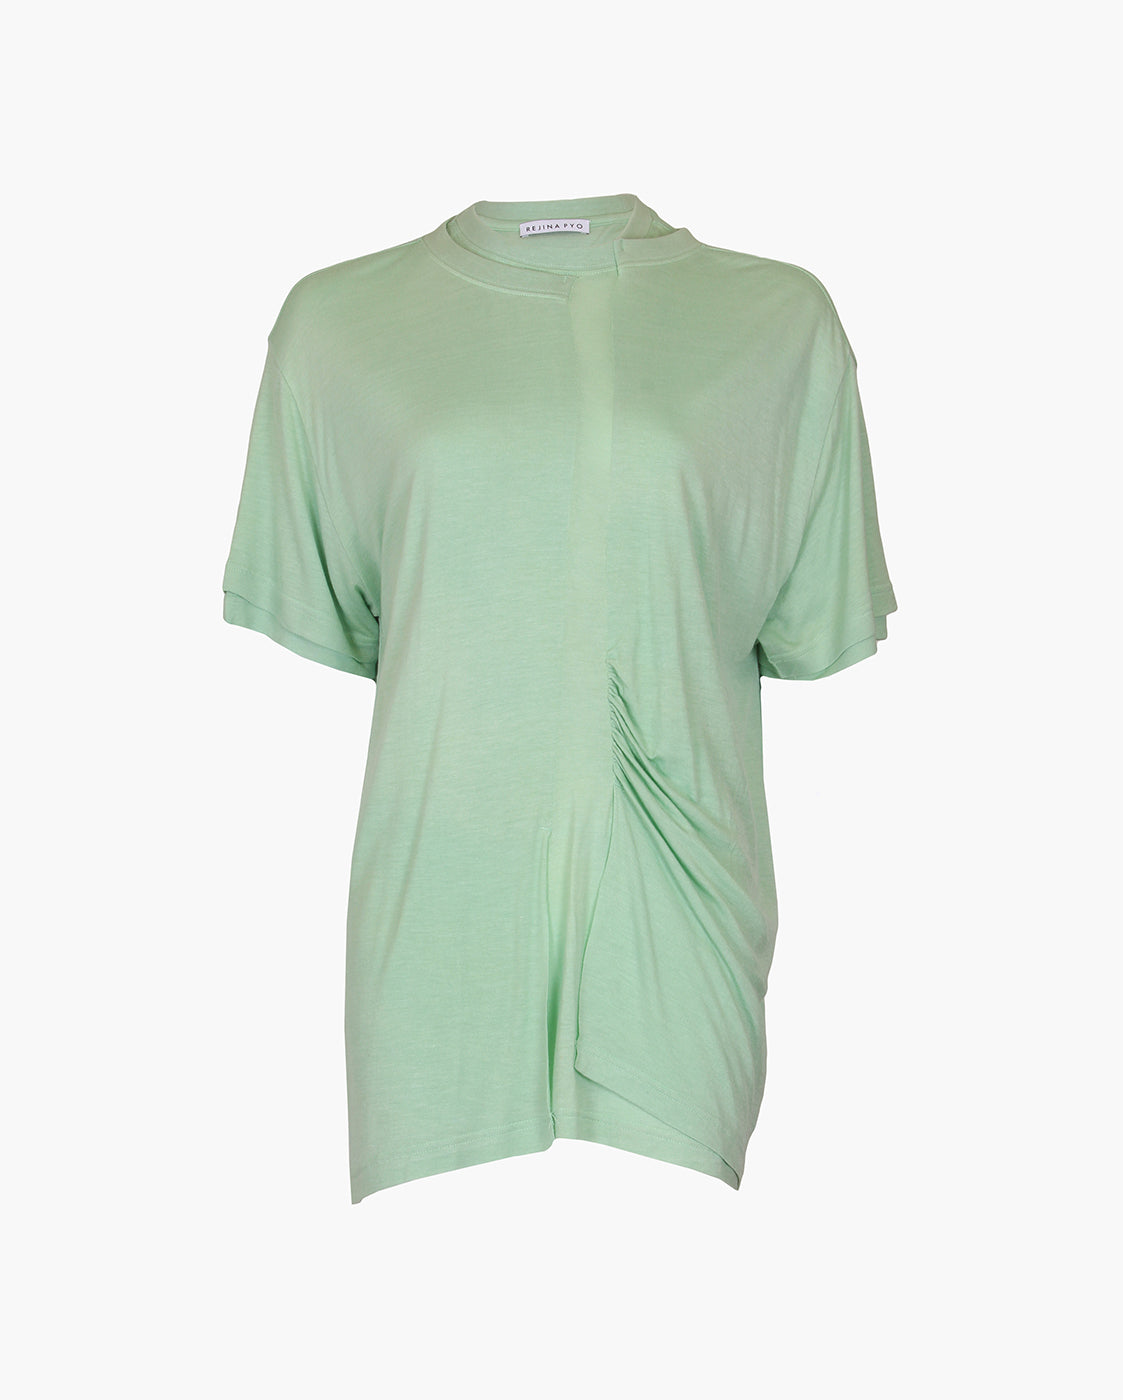 Nala T-shirt Viscose Blend Jersey Green - Special Price